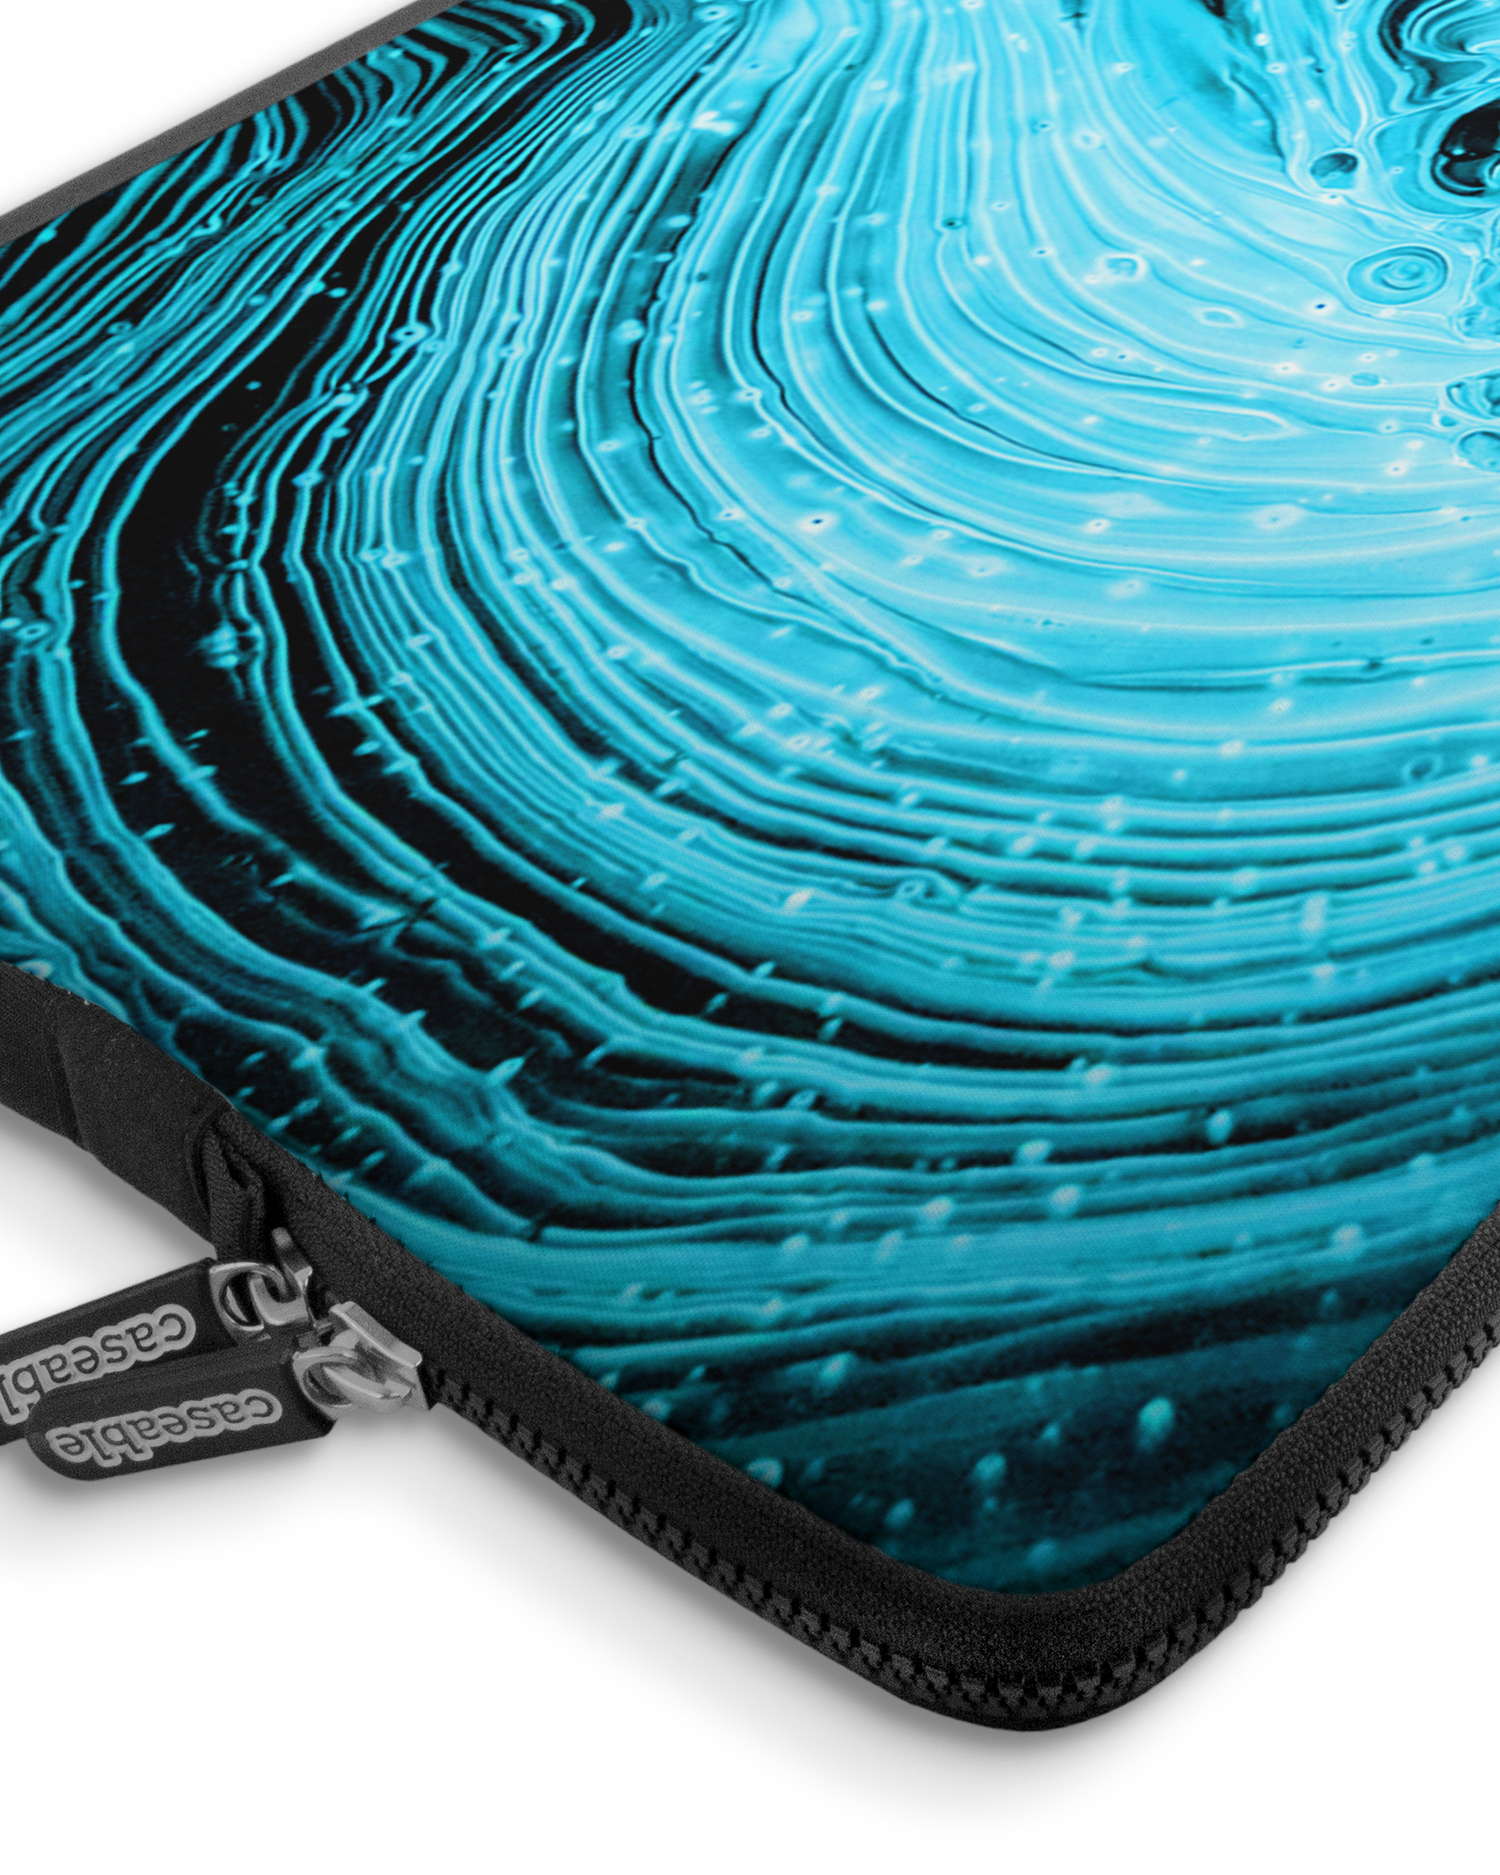 Turquoise Ripples Premium Laptoptasche 17 Zoll mit Gerät im Inneren